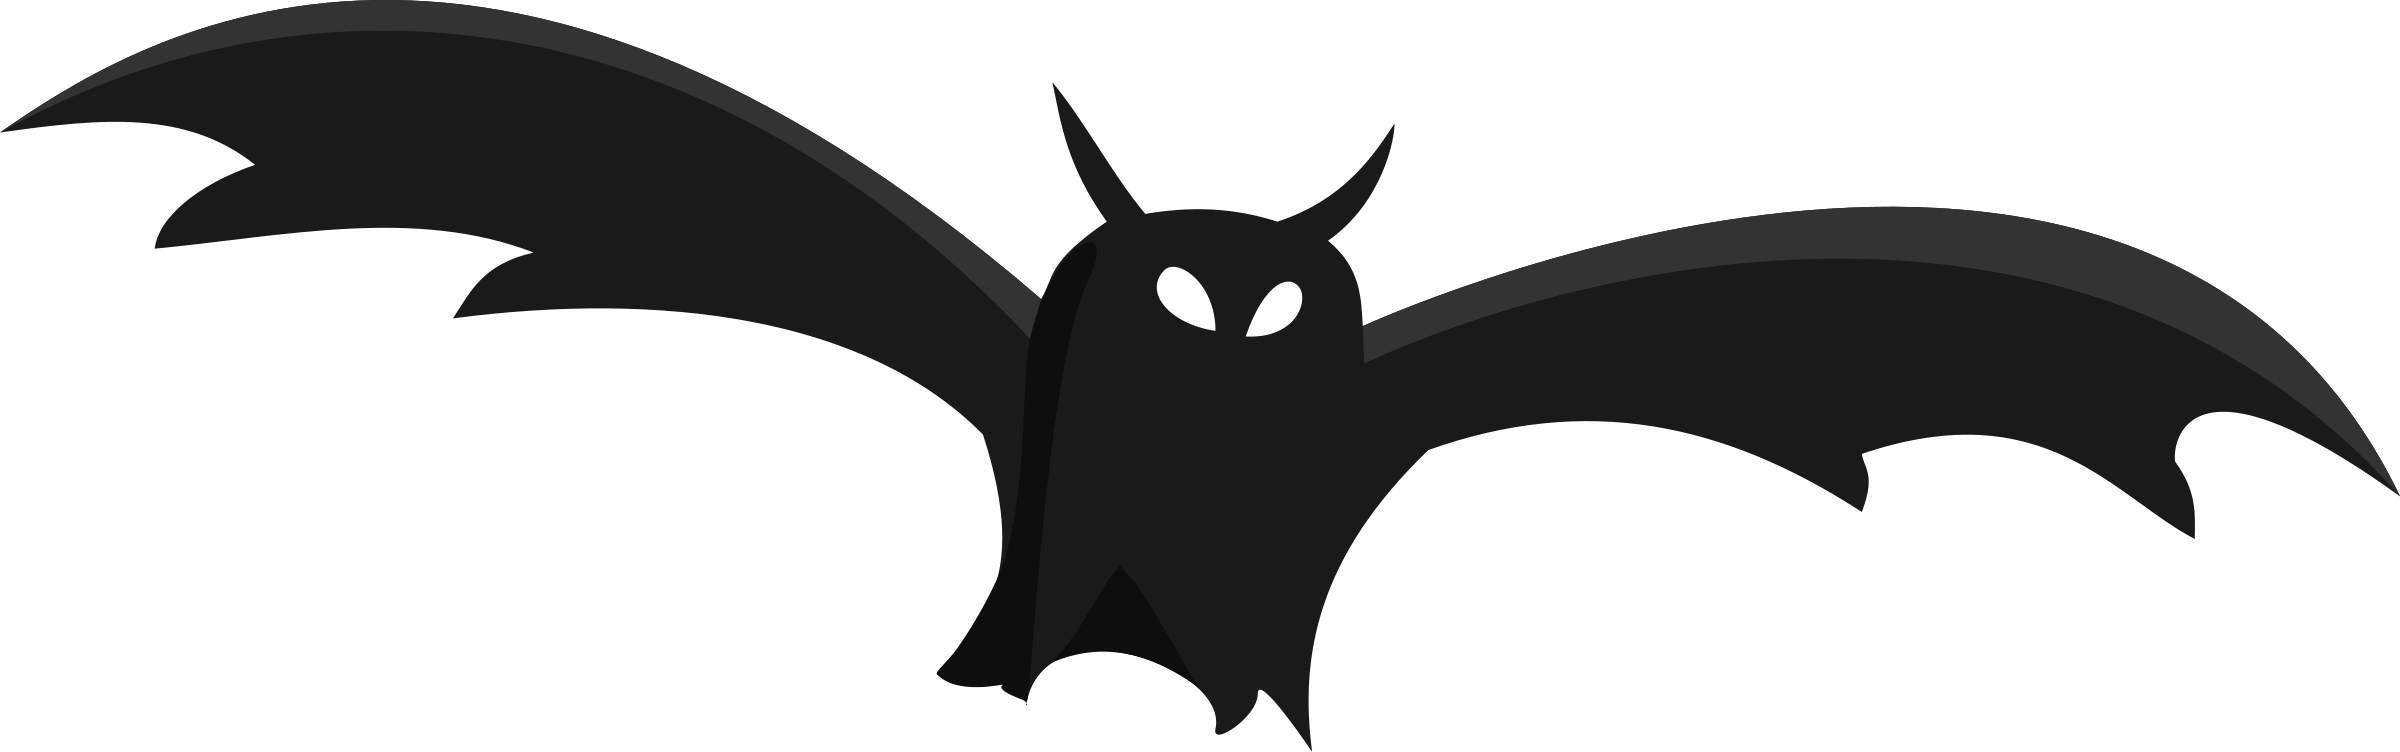 Big Image - Flying Black Bats (2400x752)